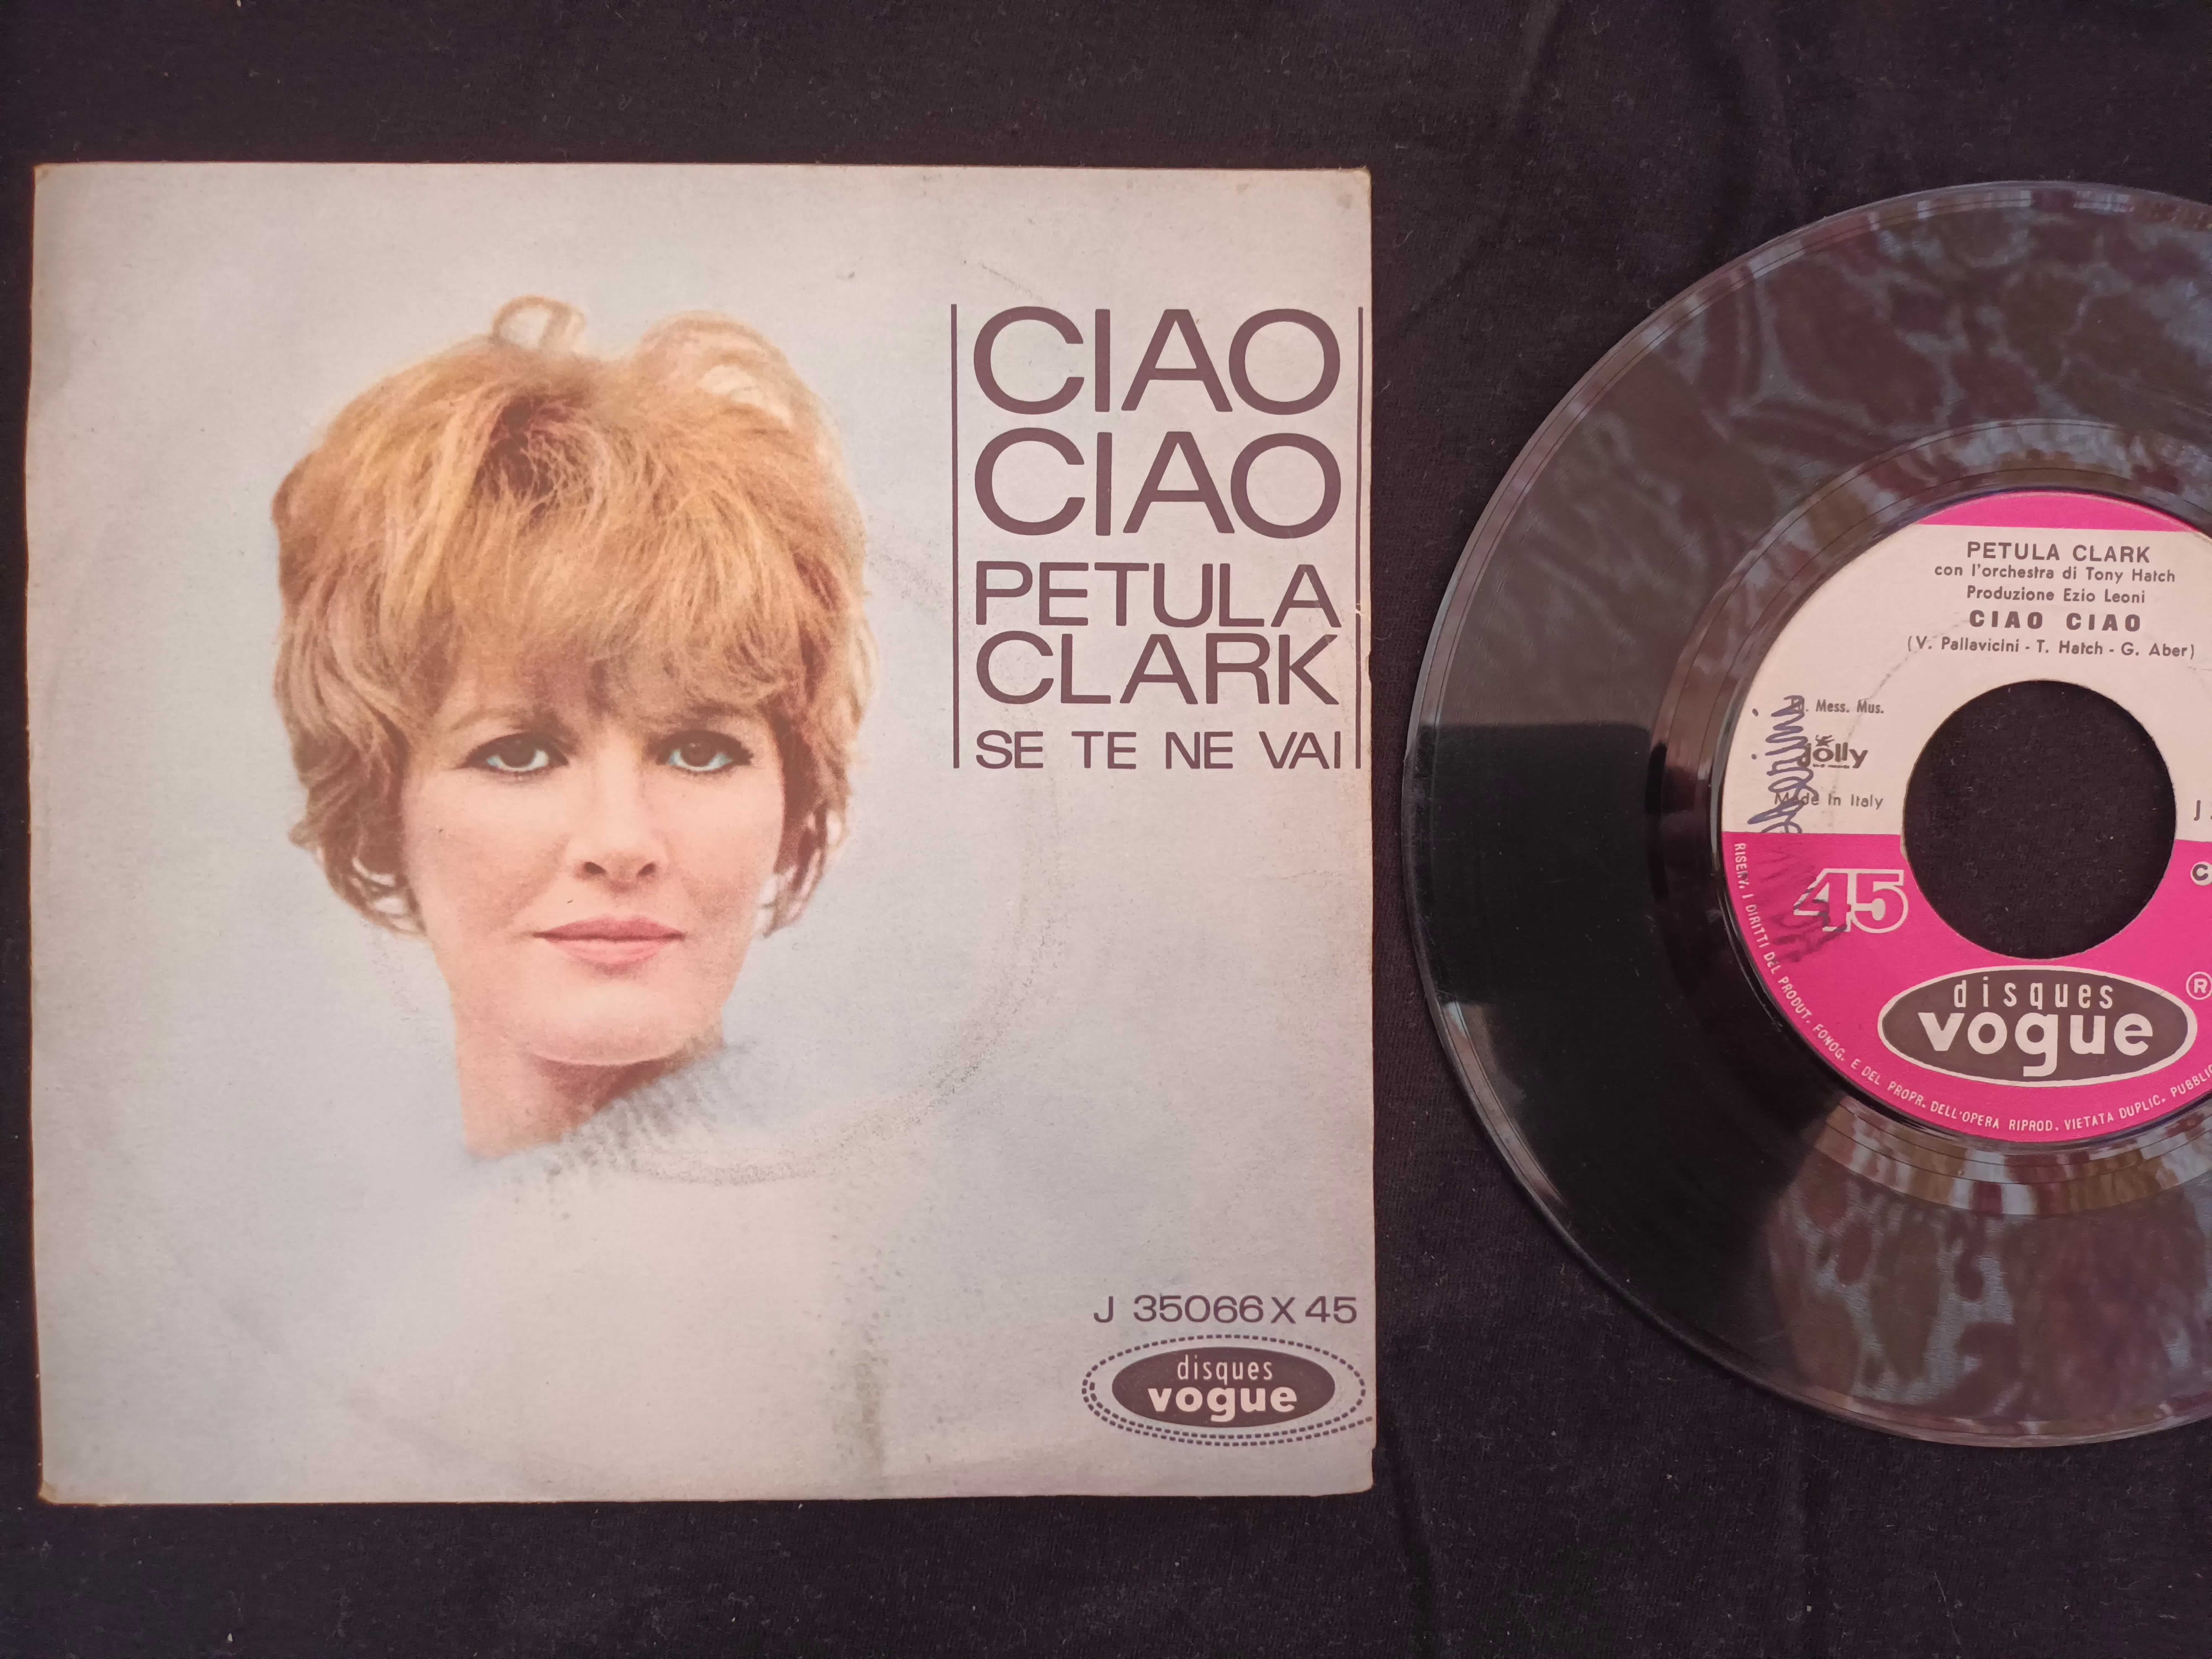 Disco de Vinil 45 RPM – PETULA CLARK – Ciau Ciau ...